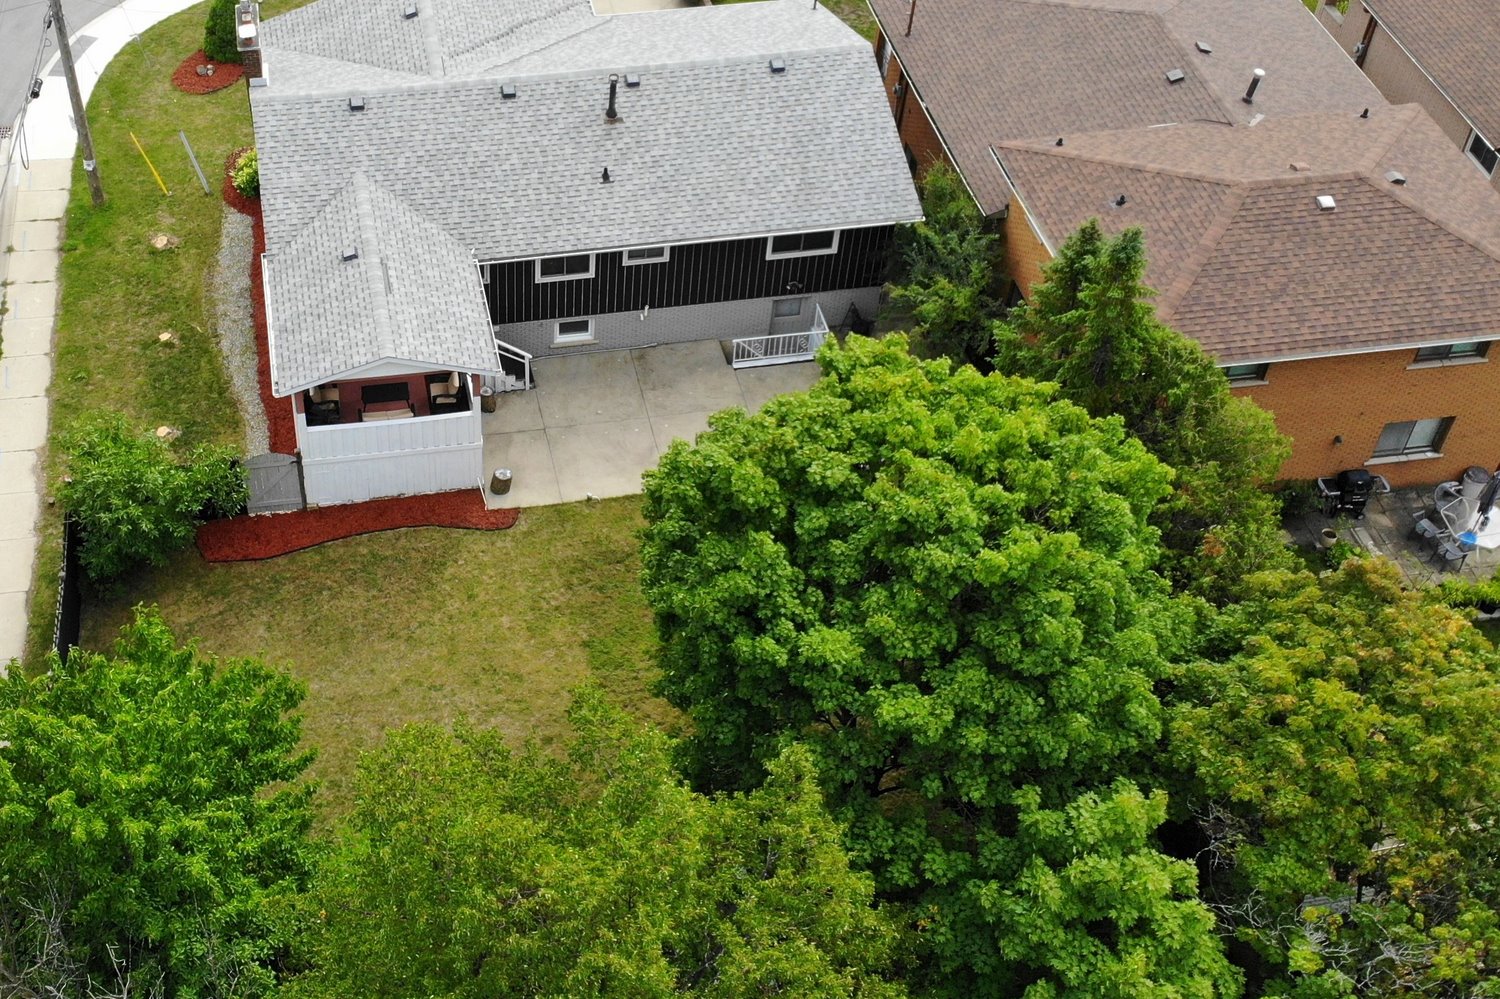 Backyard Aerial View